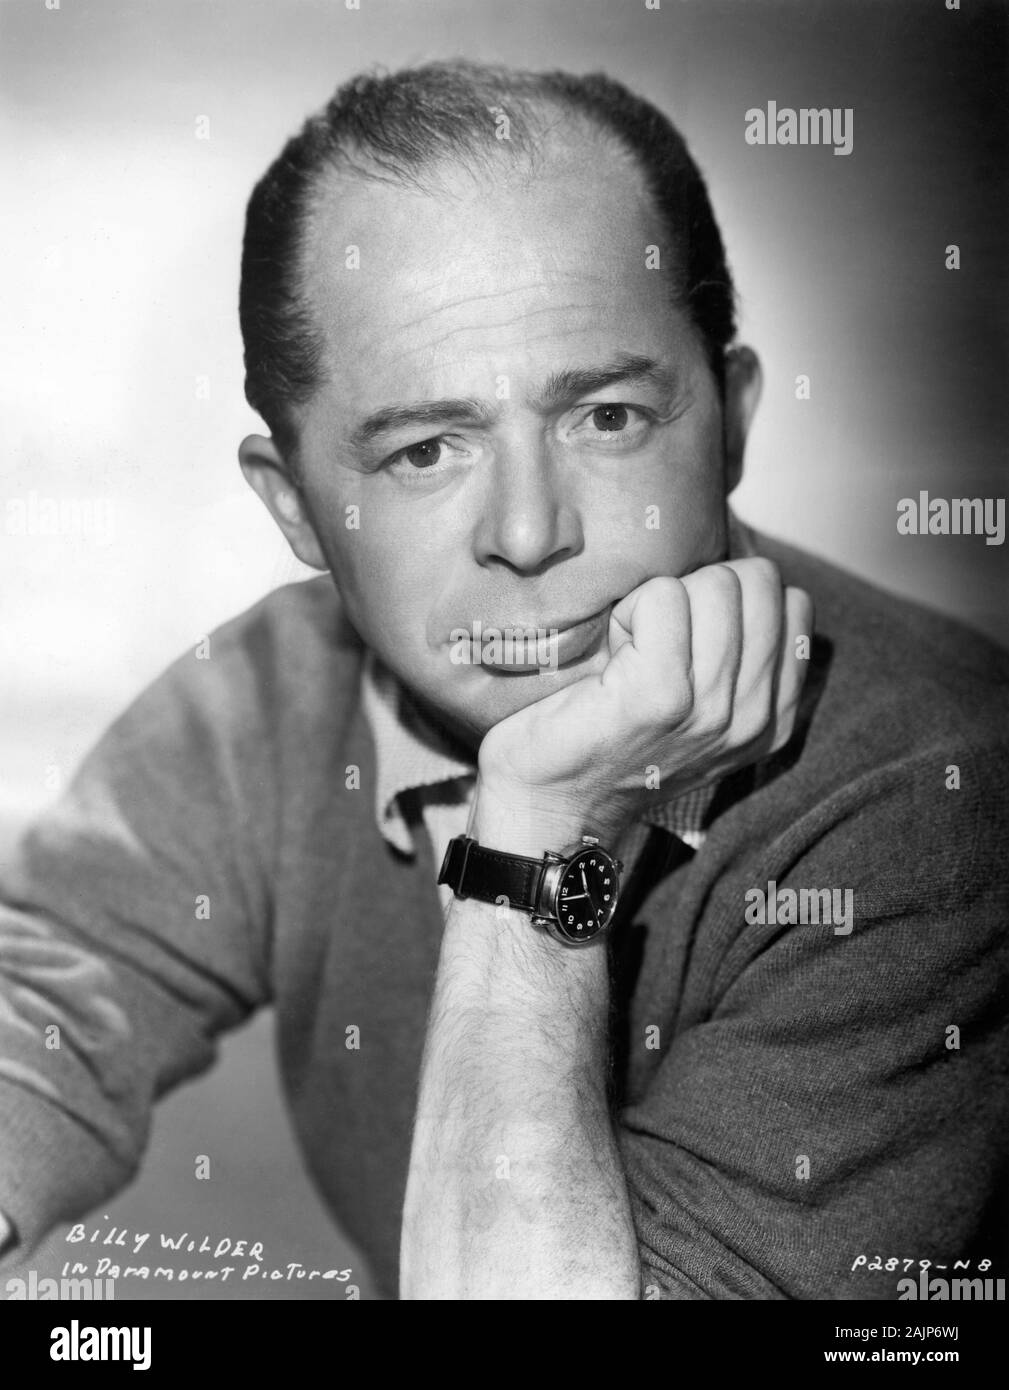 Regista / Scrittore Billy Wilder 1946 Ritratto Paramount Pictures Foto Stock